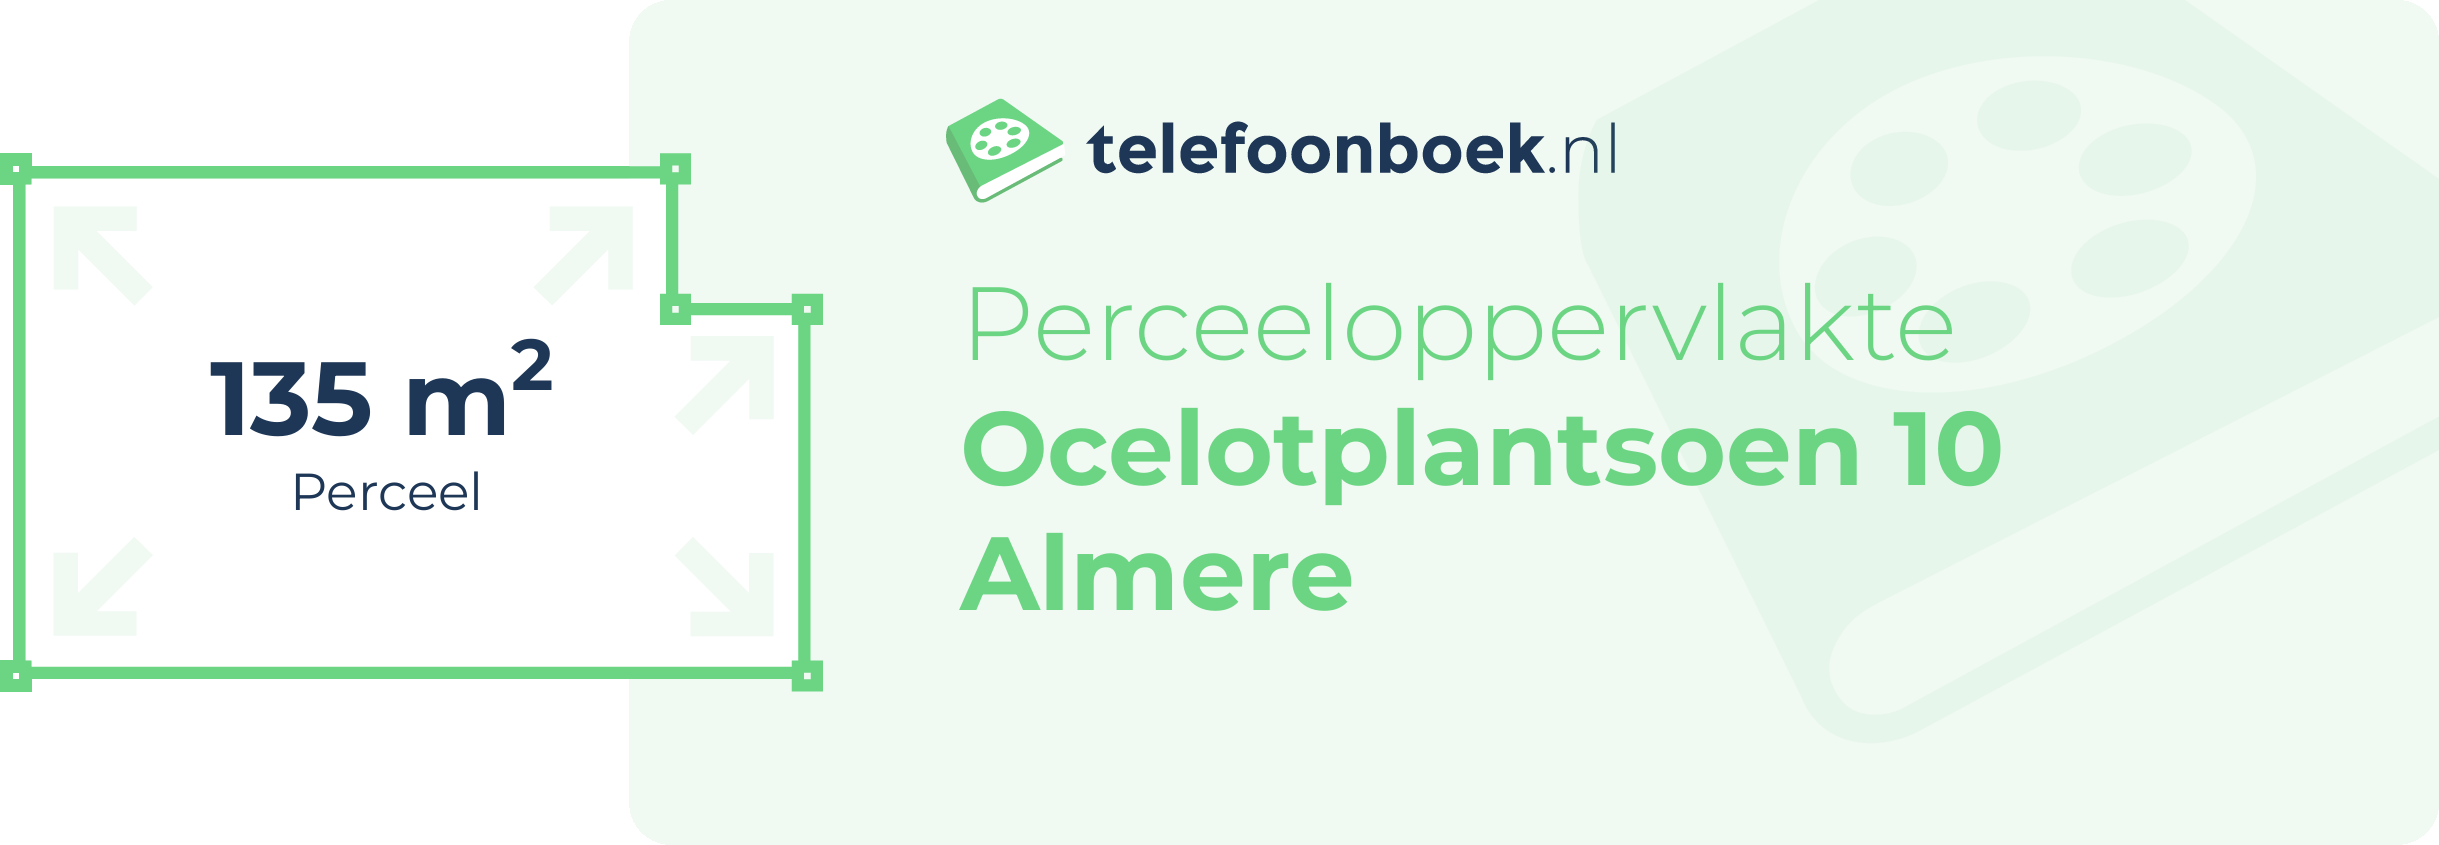 Perceeloppervlakte Ocelotplantsoen 10 Almere